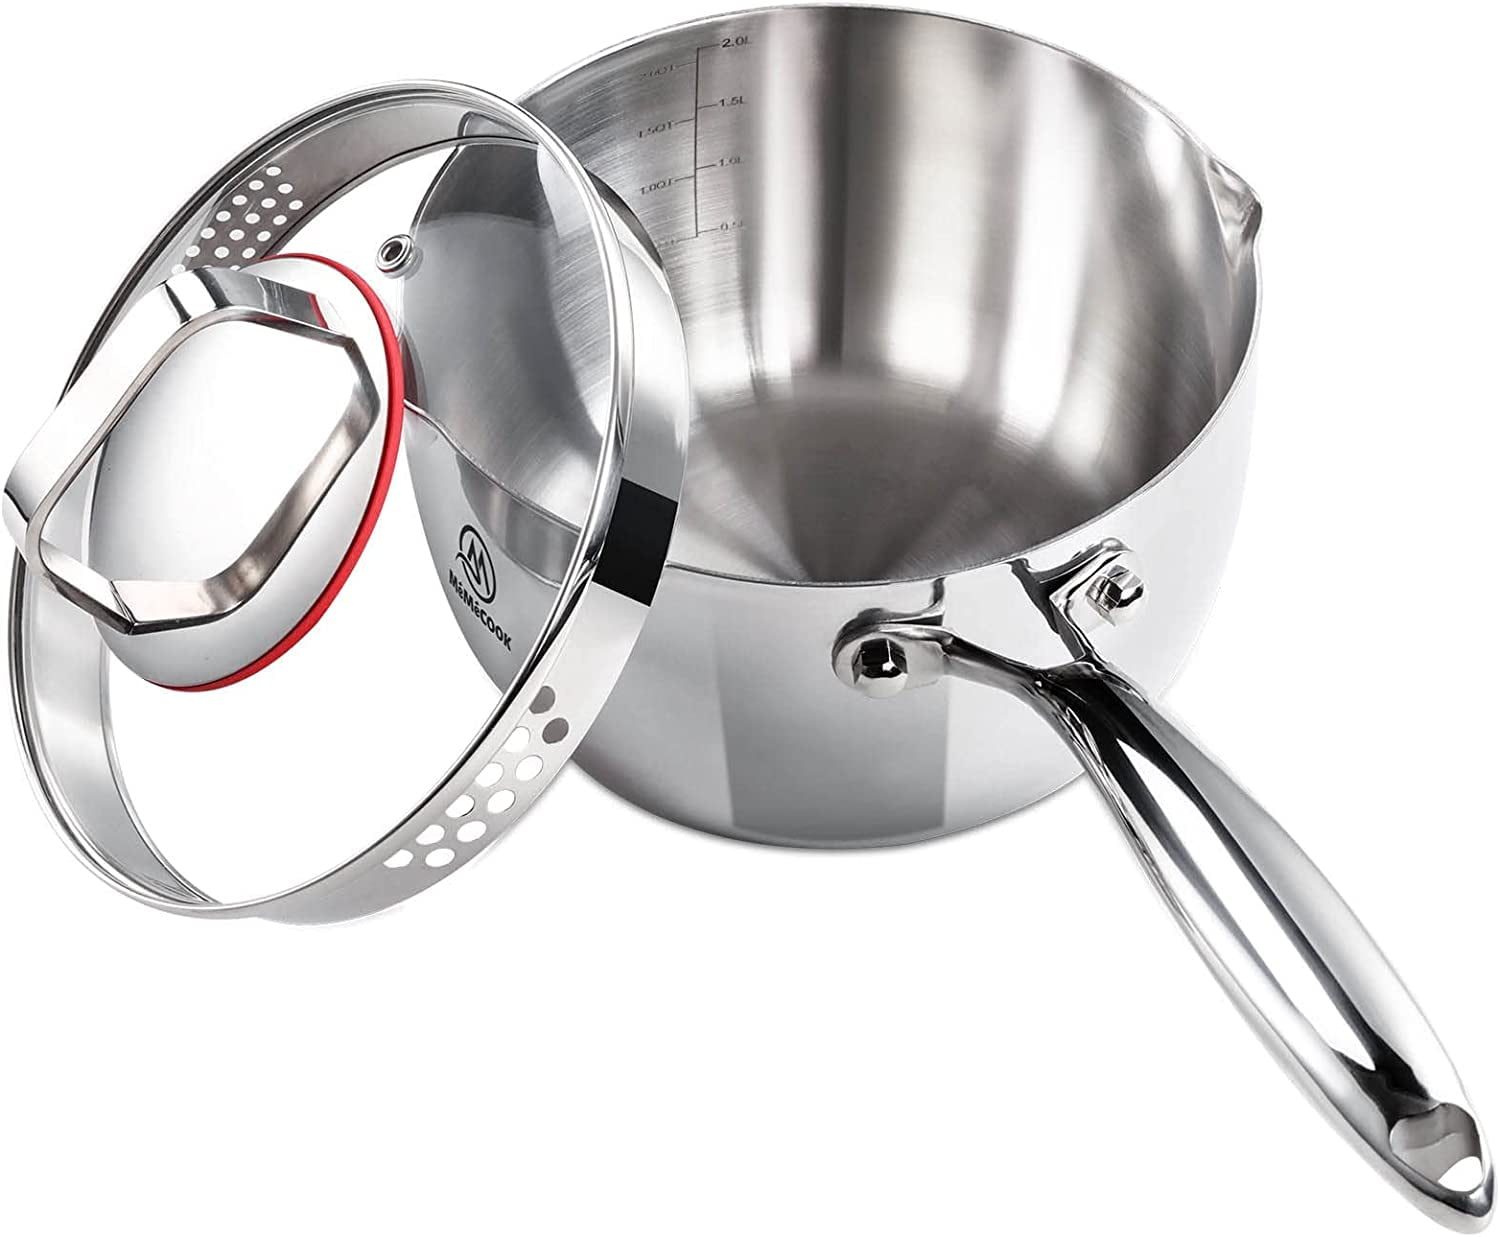 BOZO 2.5 Quart Stainless Steel Pot, Sauce Pan, Cooking Pots, Saucepans ...